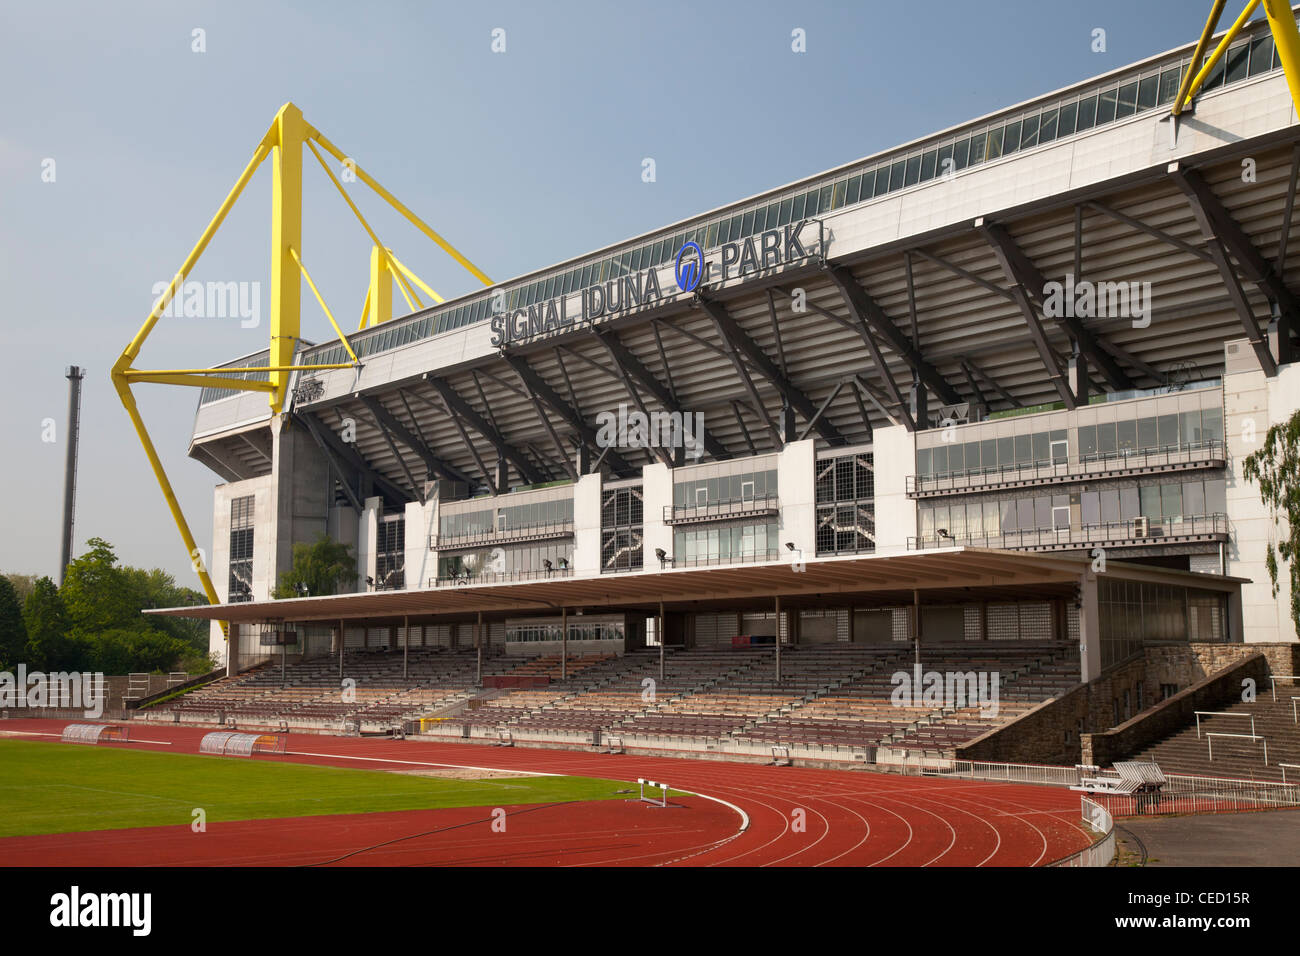 Stade Signal Iduna Park, Dortmund, Ruhr, Nordrhein-Westfalen, Germany, Europe Banque D'Images